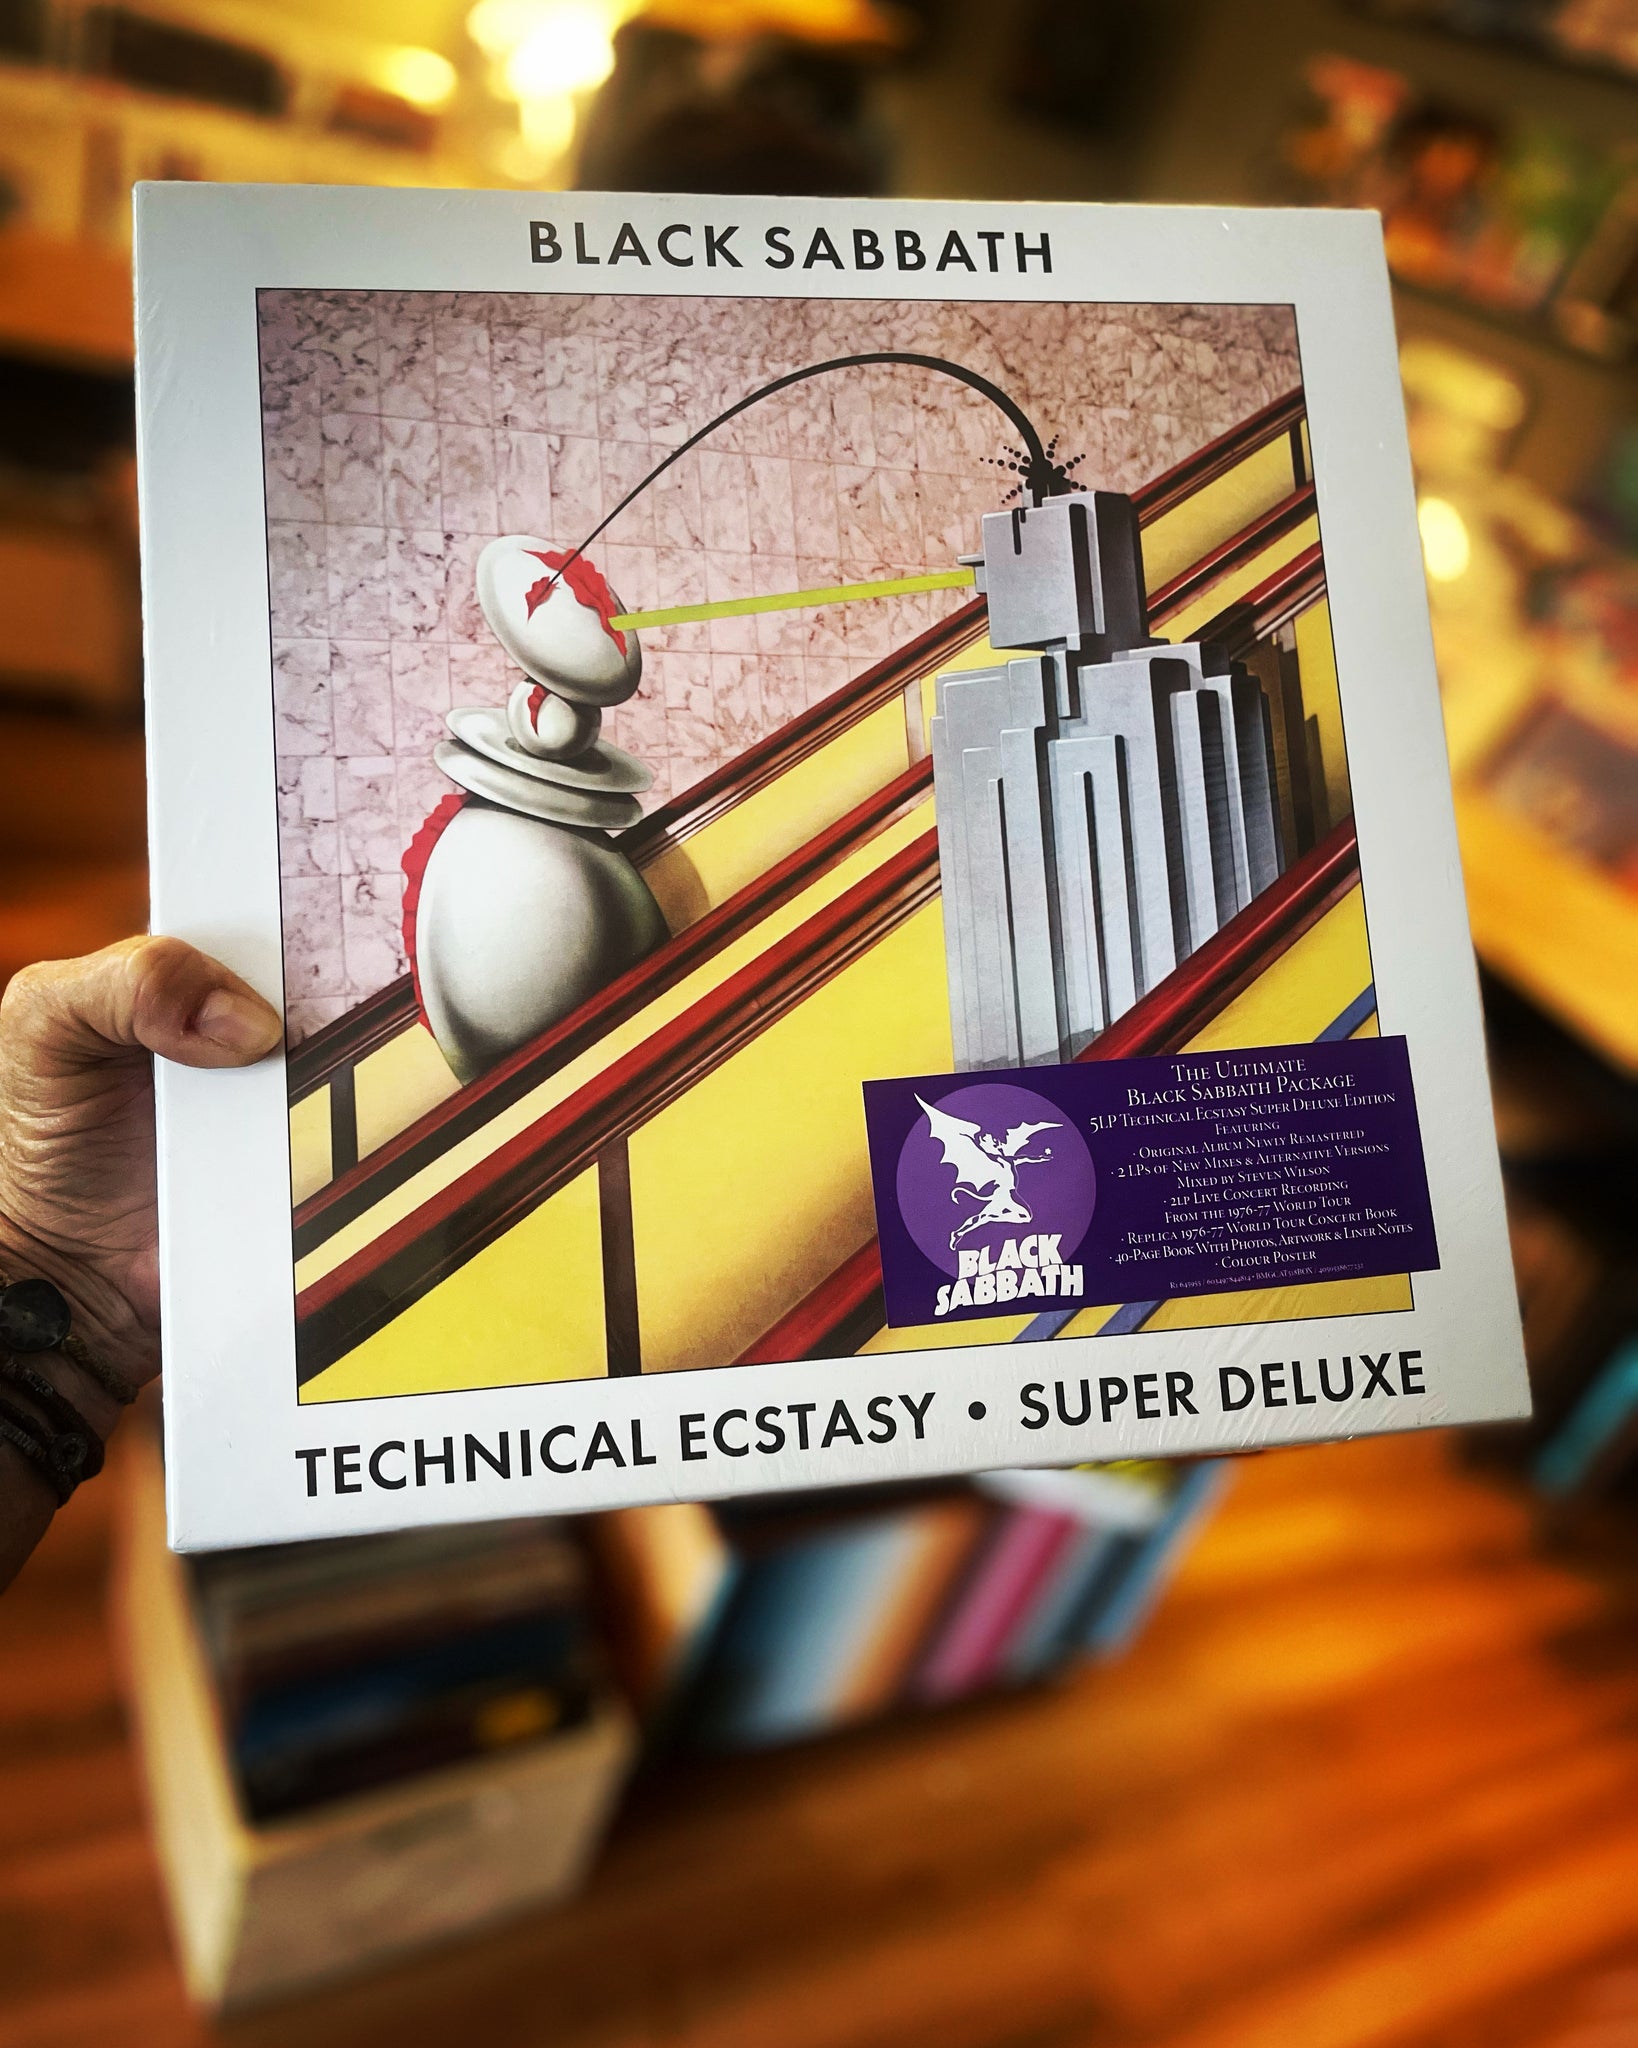 black sabbath technical ecstasy album cover